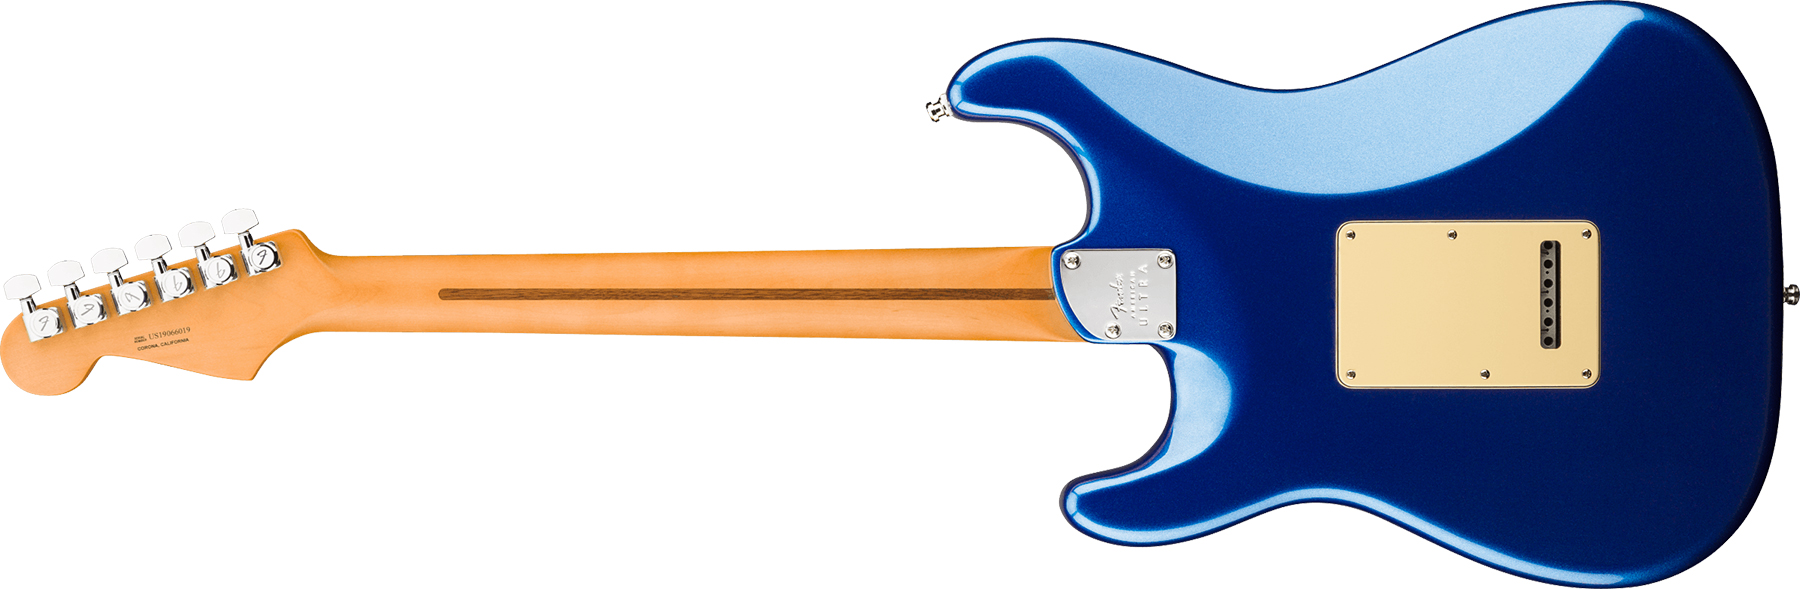 Fender Strat American Ultra Hss 2019 Usa Rw - Cobra Blue - Str shape electric guitar - Variation 1